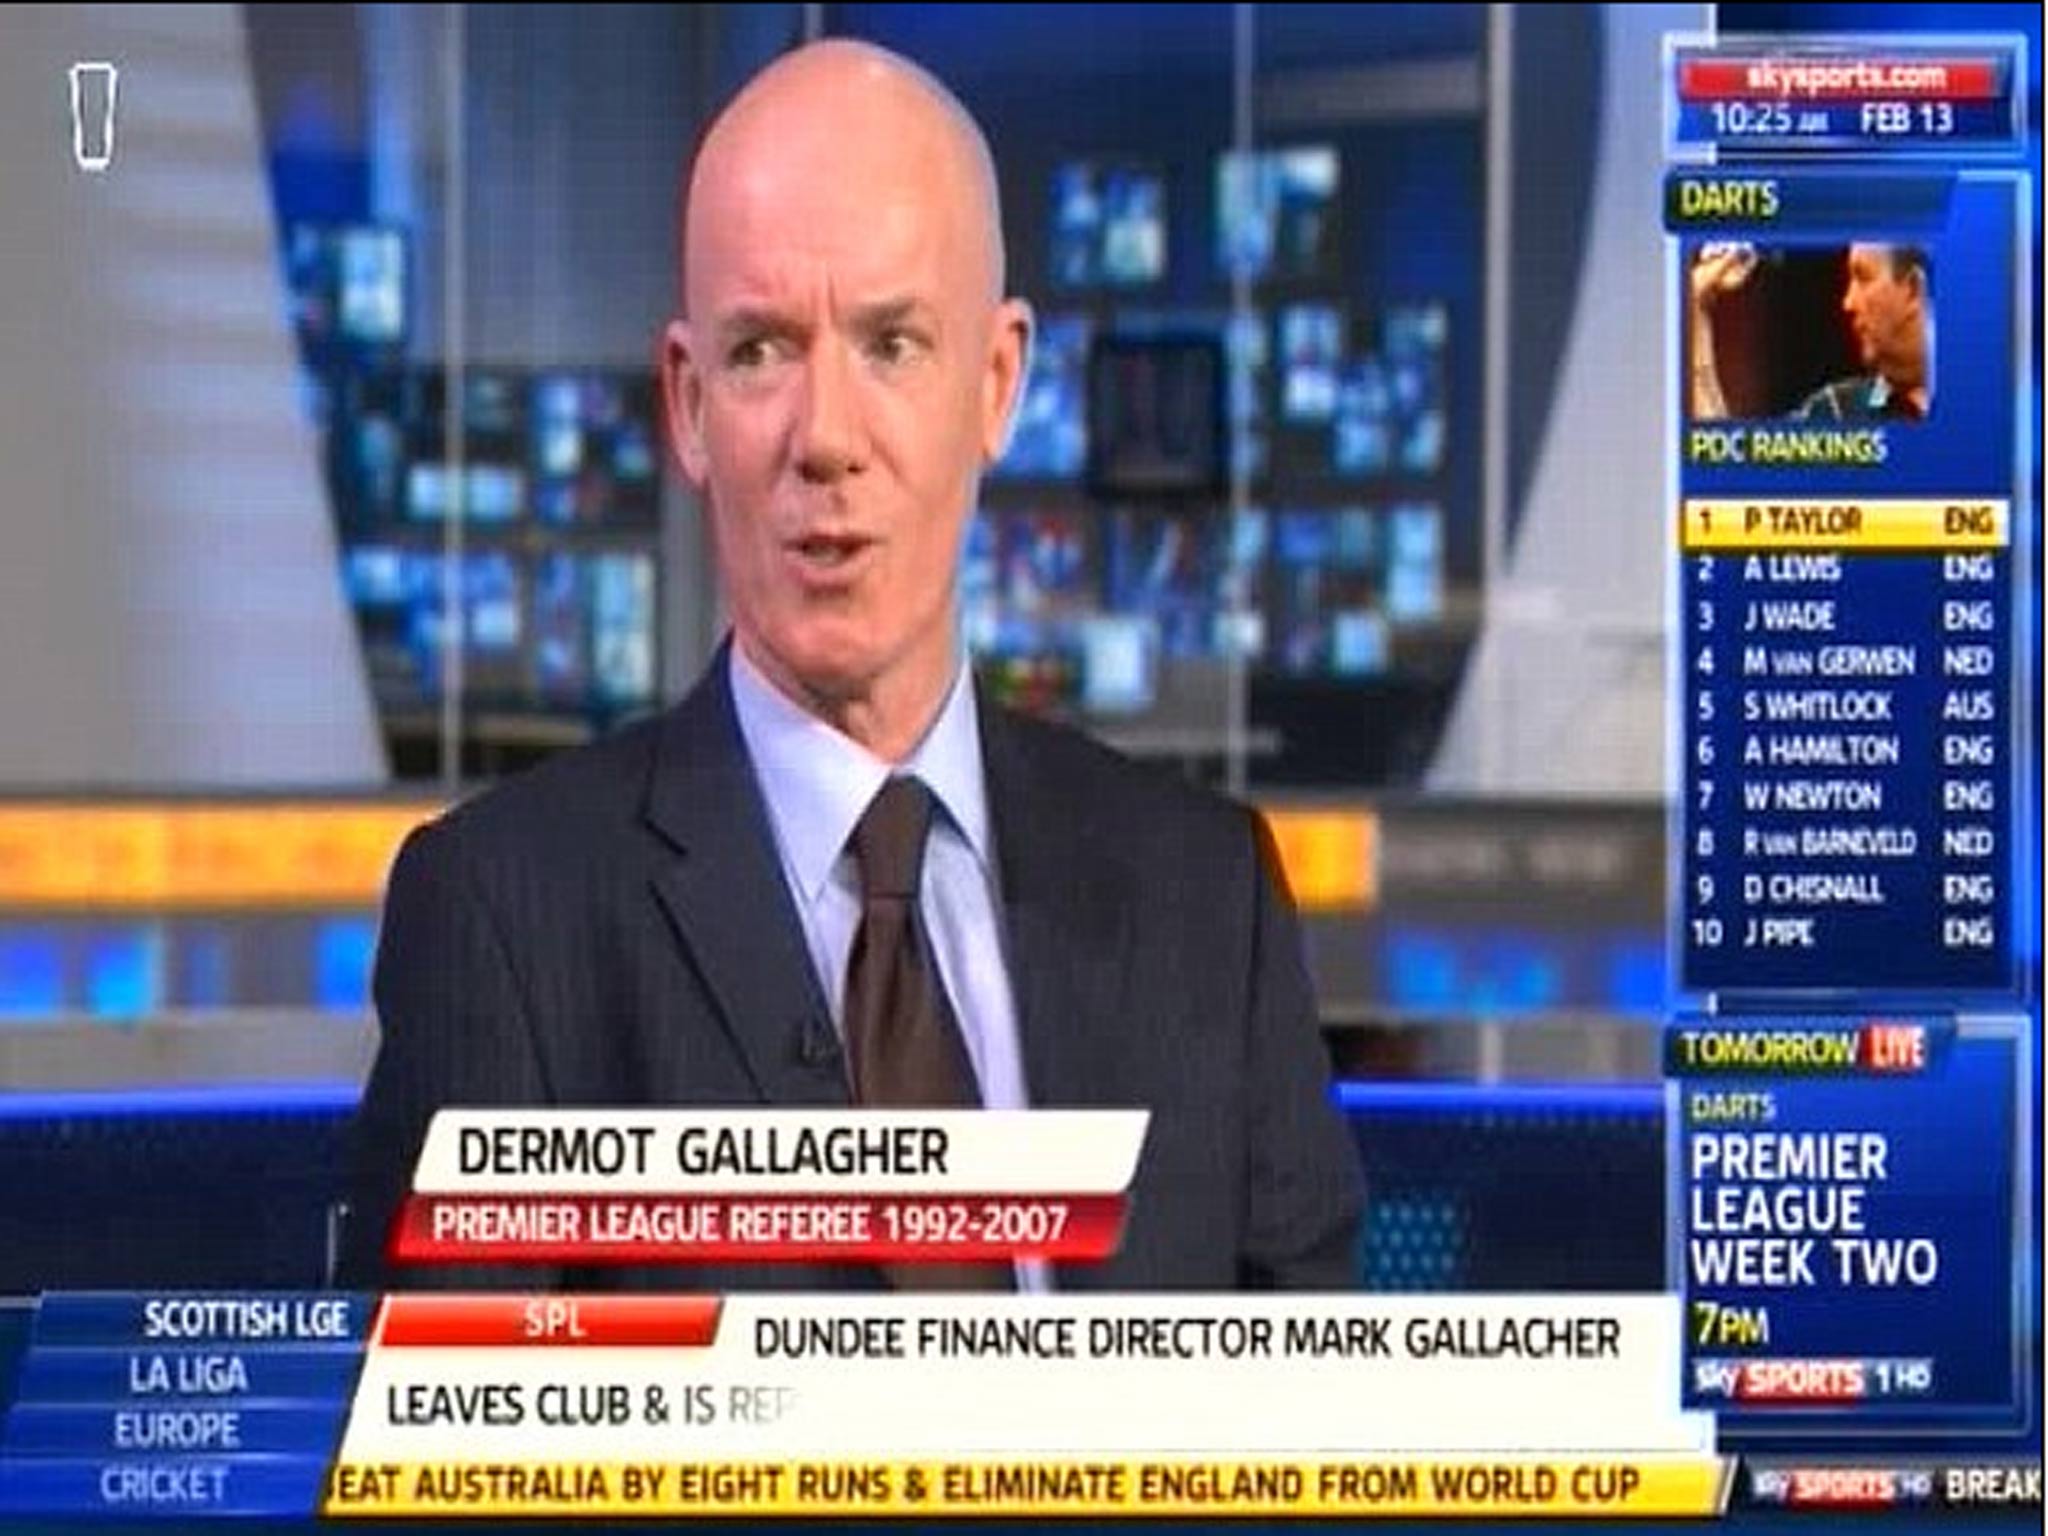 Dermot Gallagher on Sky Sports News